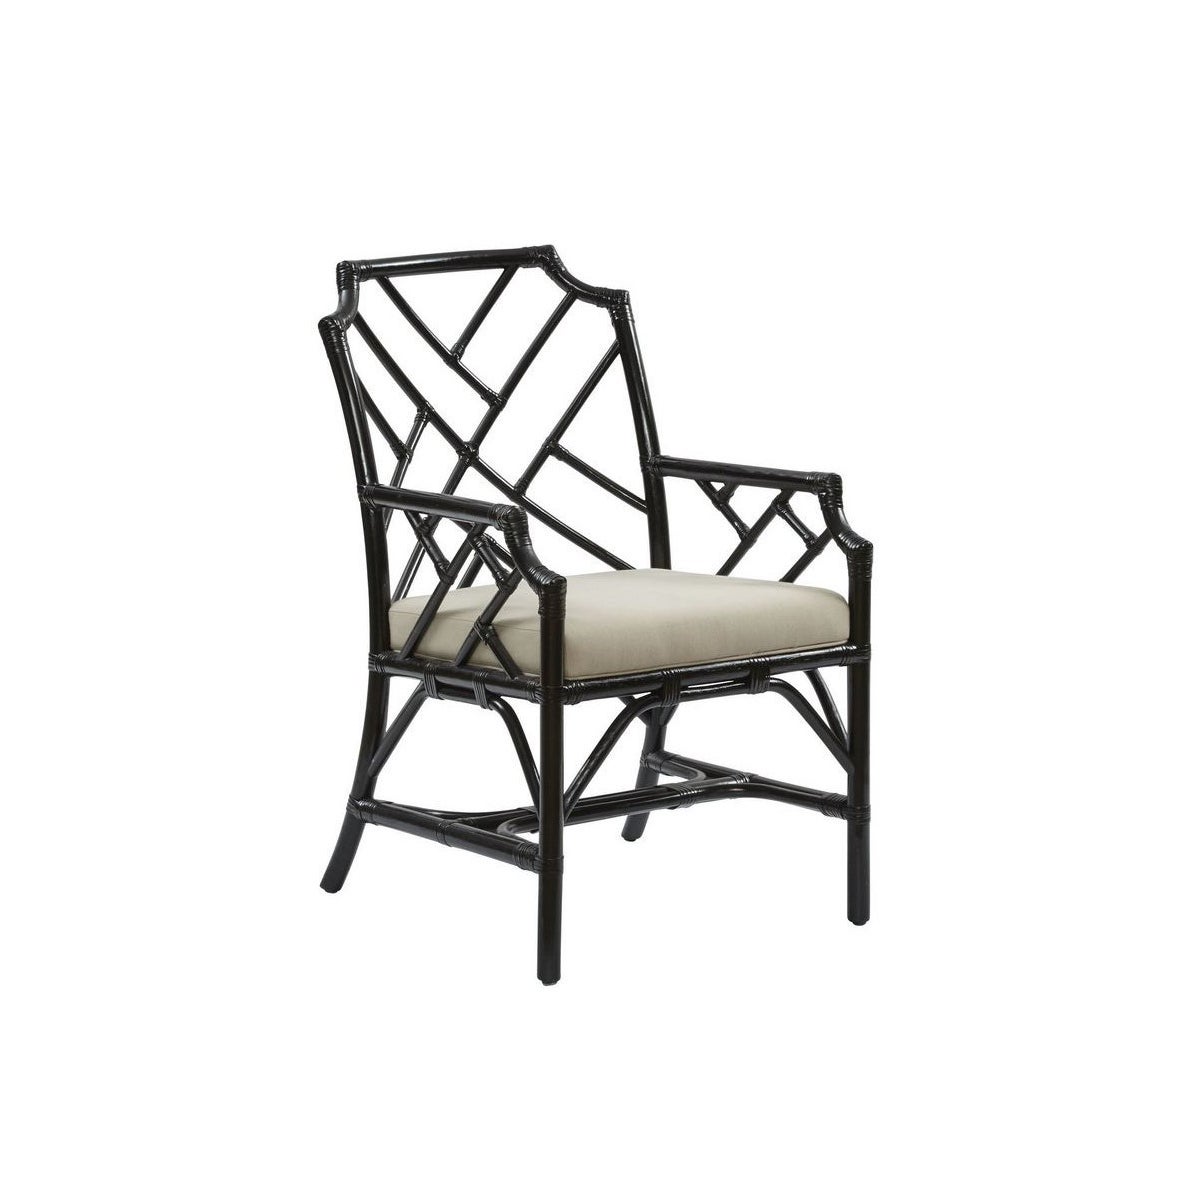 Palm Beach Chippendale Arm Chair Unpainted - "Select Your Color" Cushion Color - CreamRattan Fram